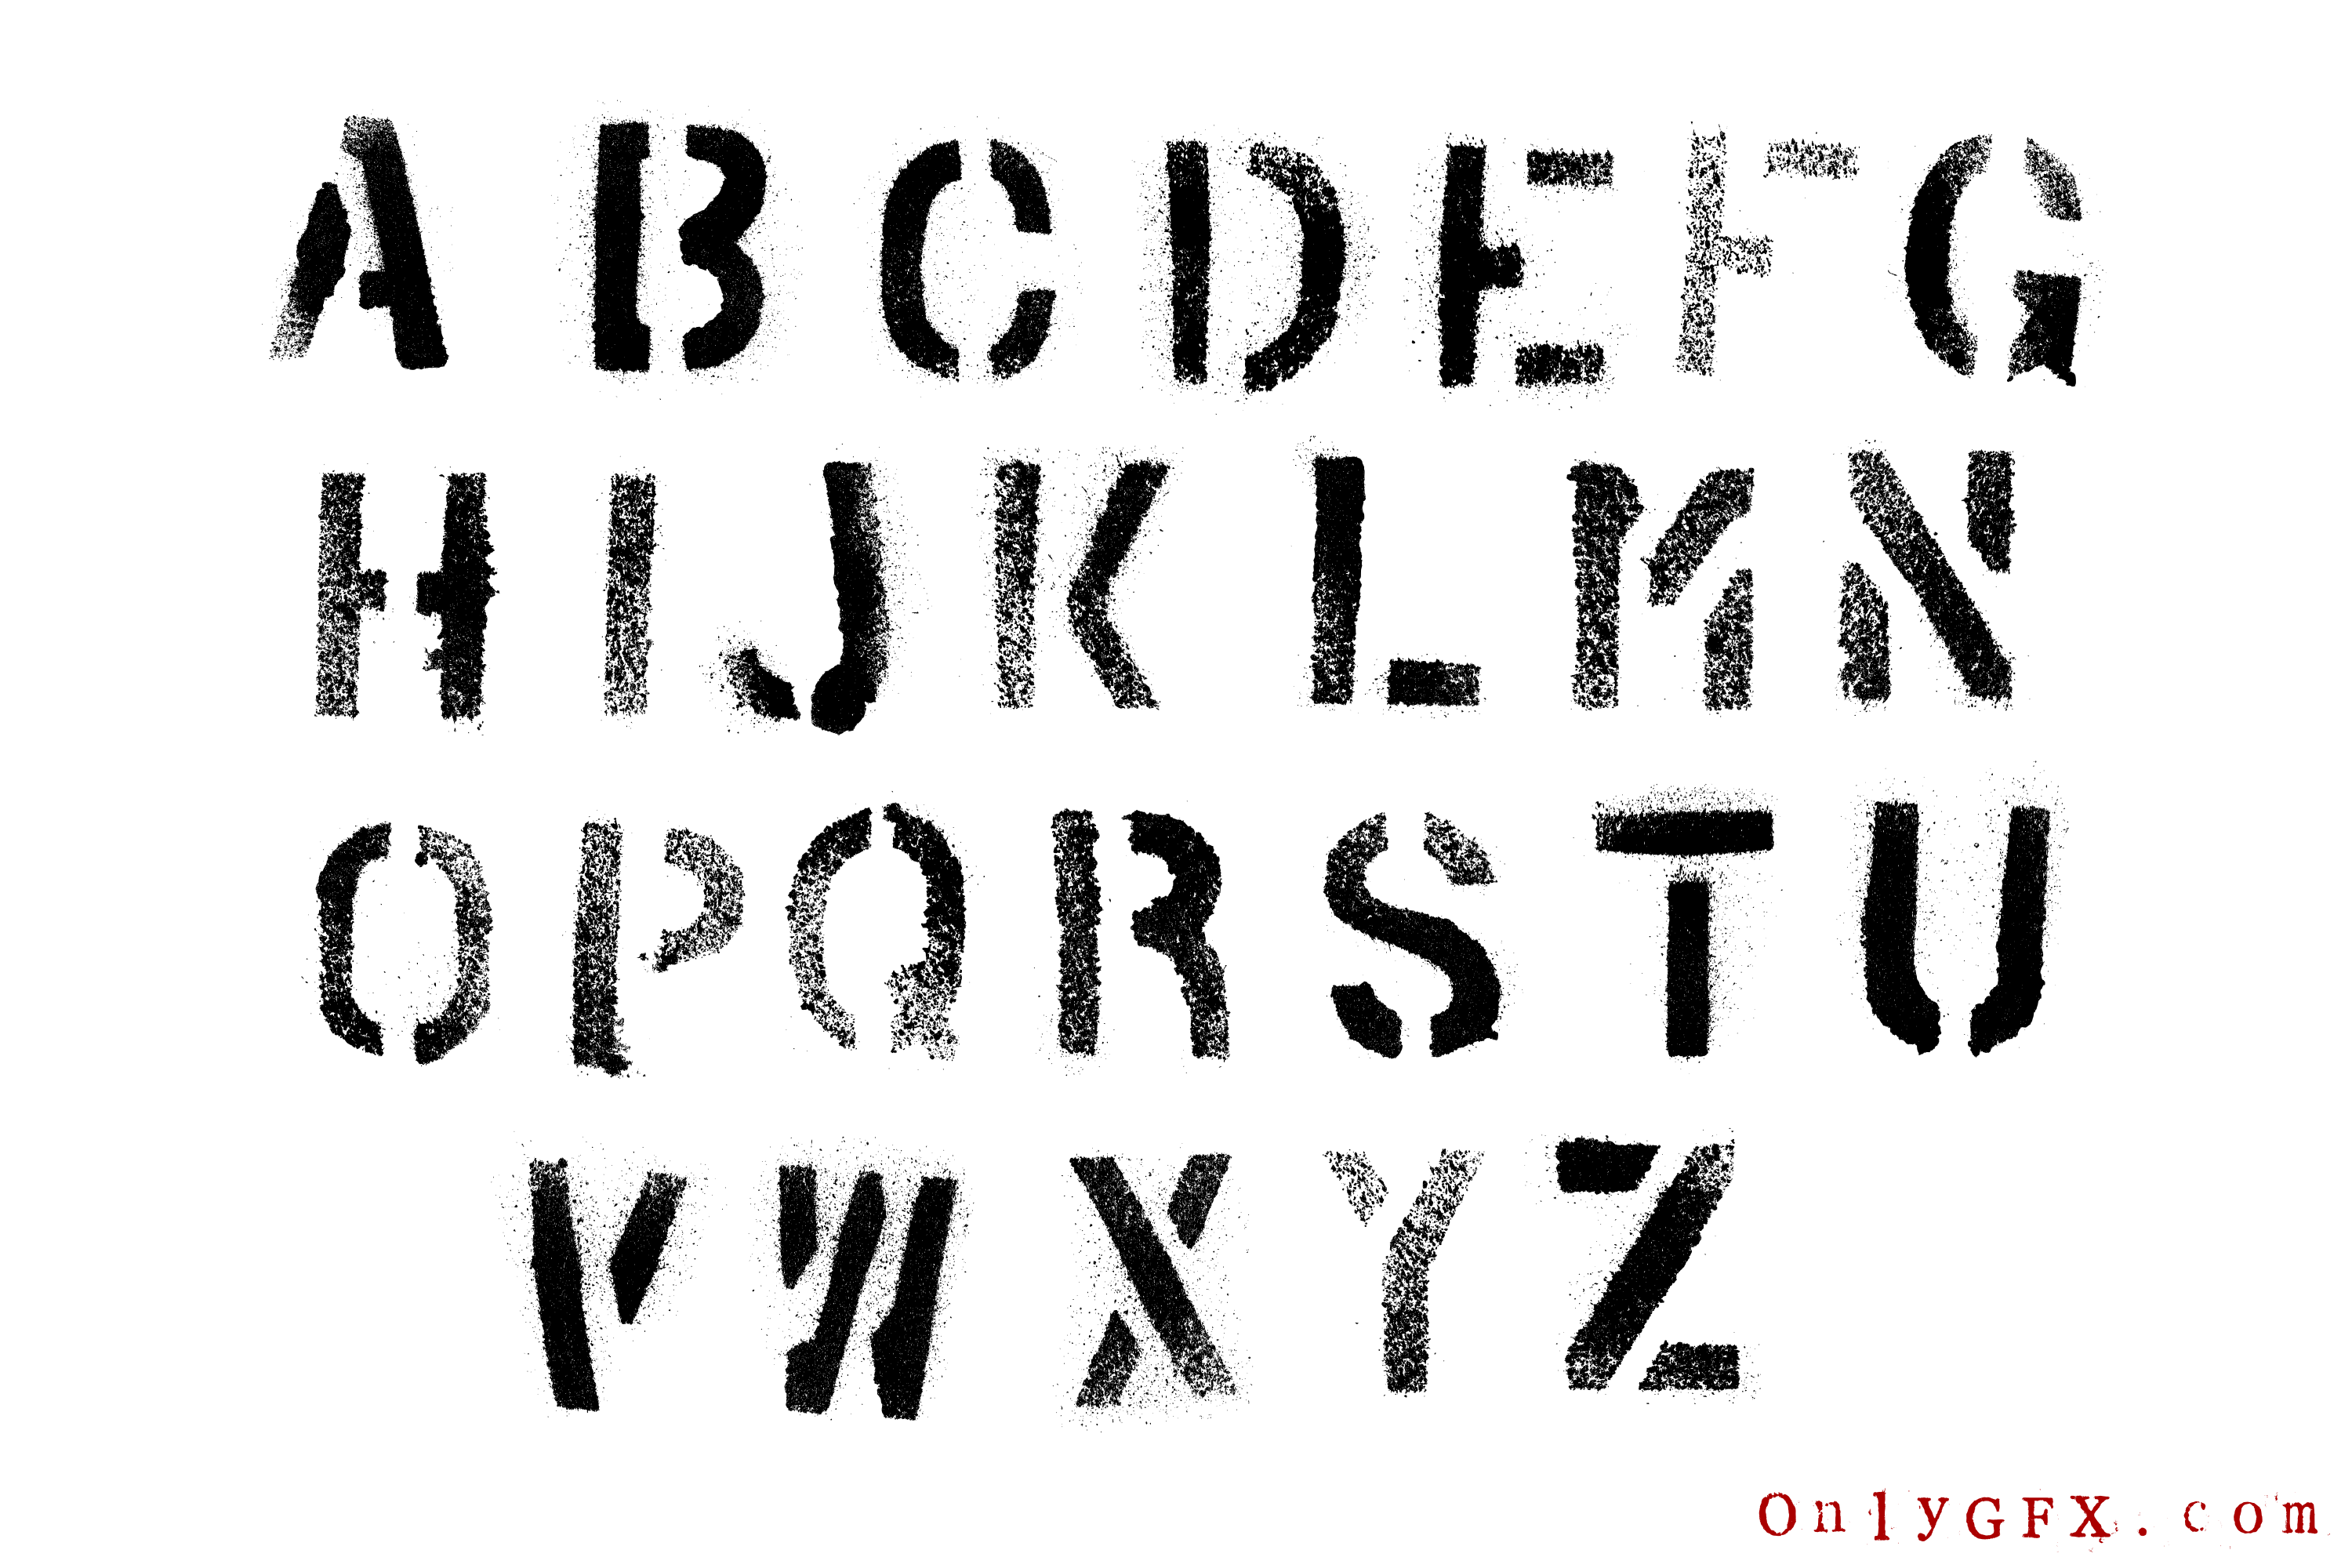 Grunge Stencil Spray Paint Alphabet (PNG Transparent, SVG)